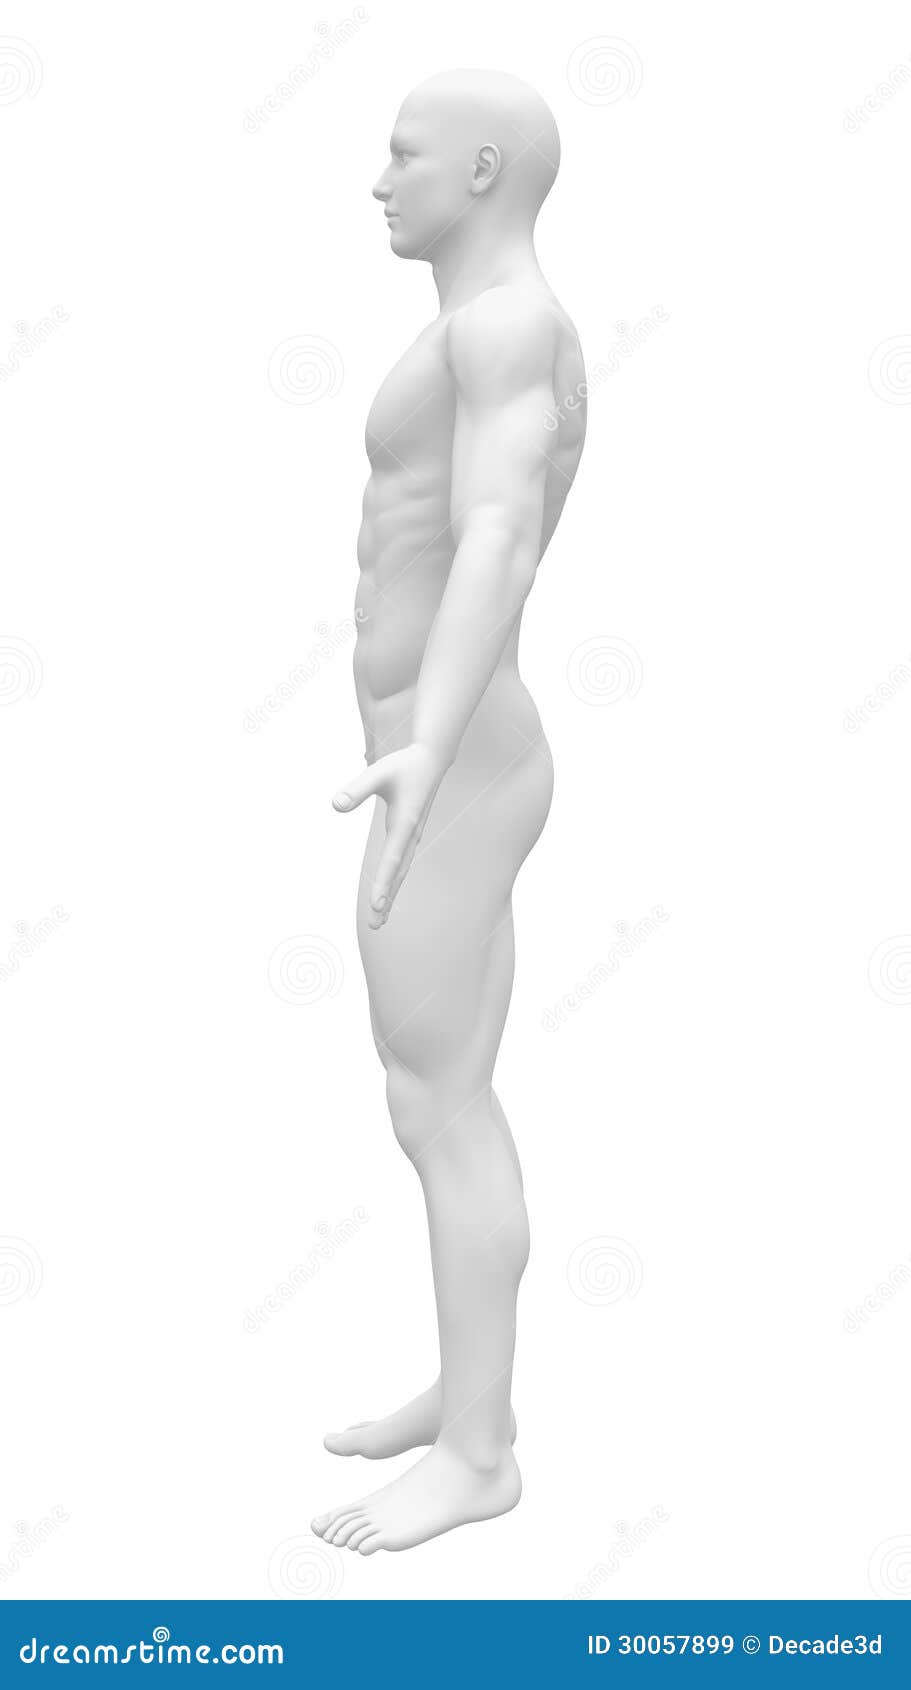 blank anatomy figure - side view